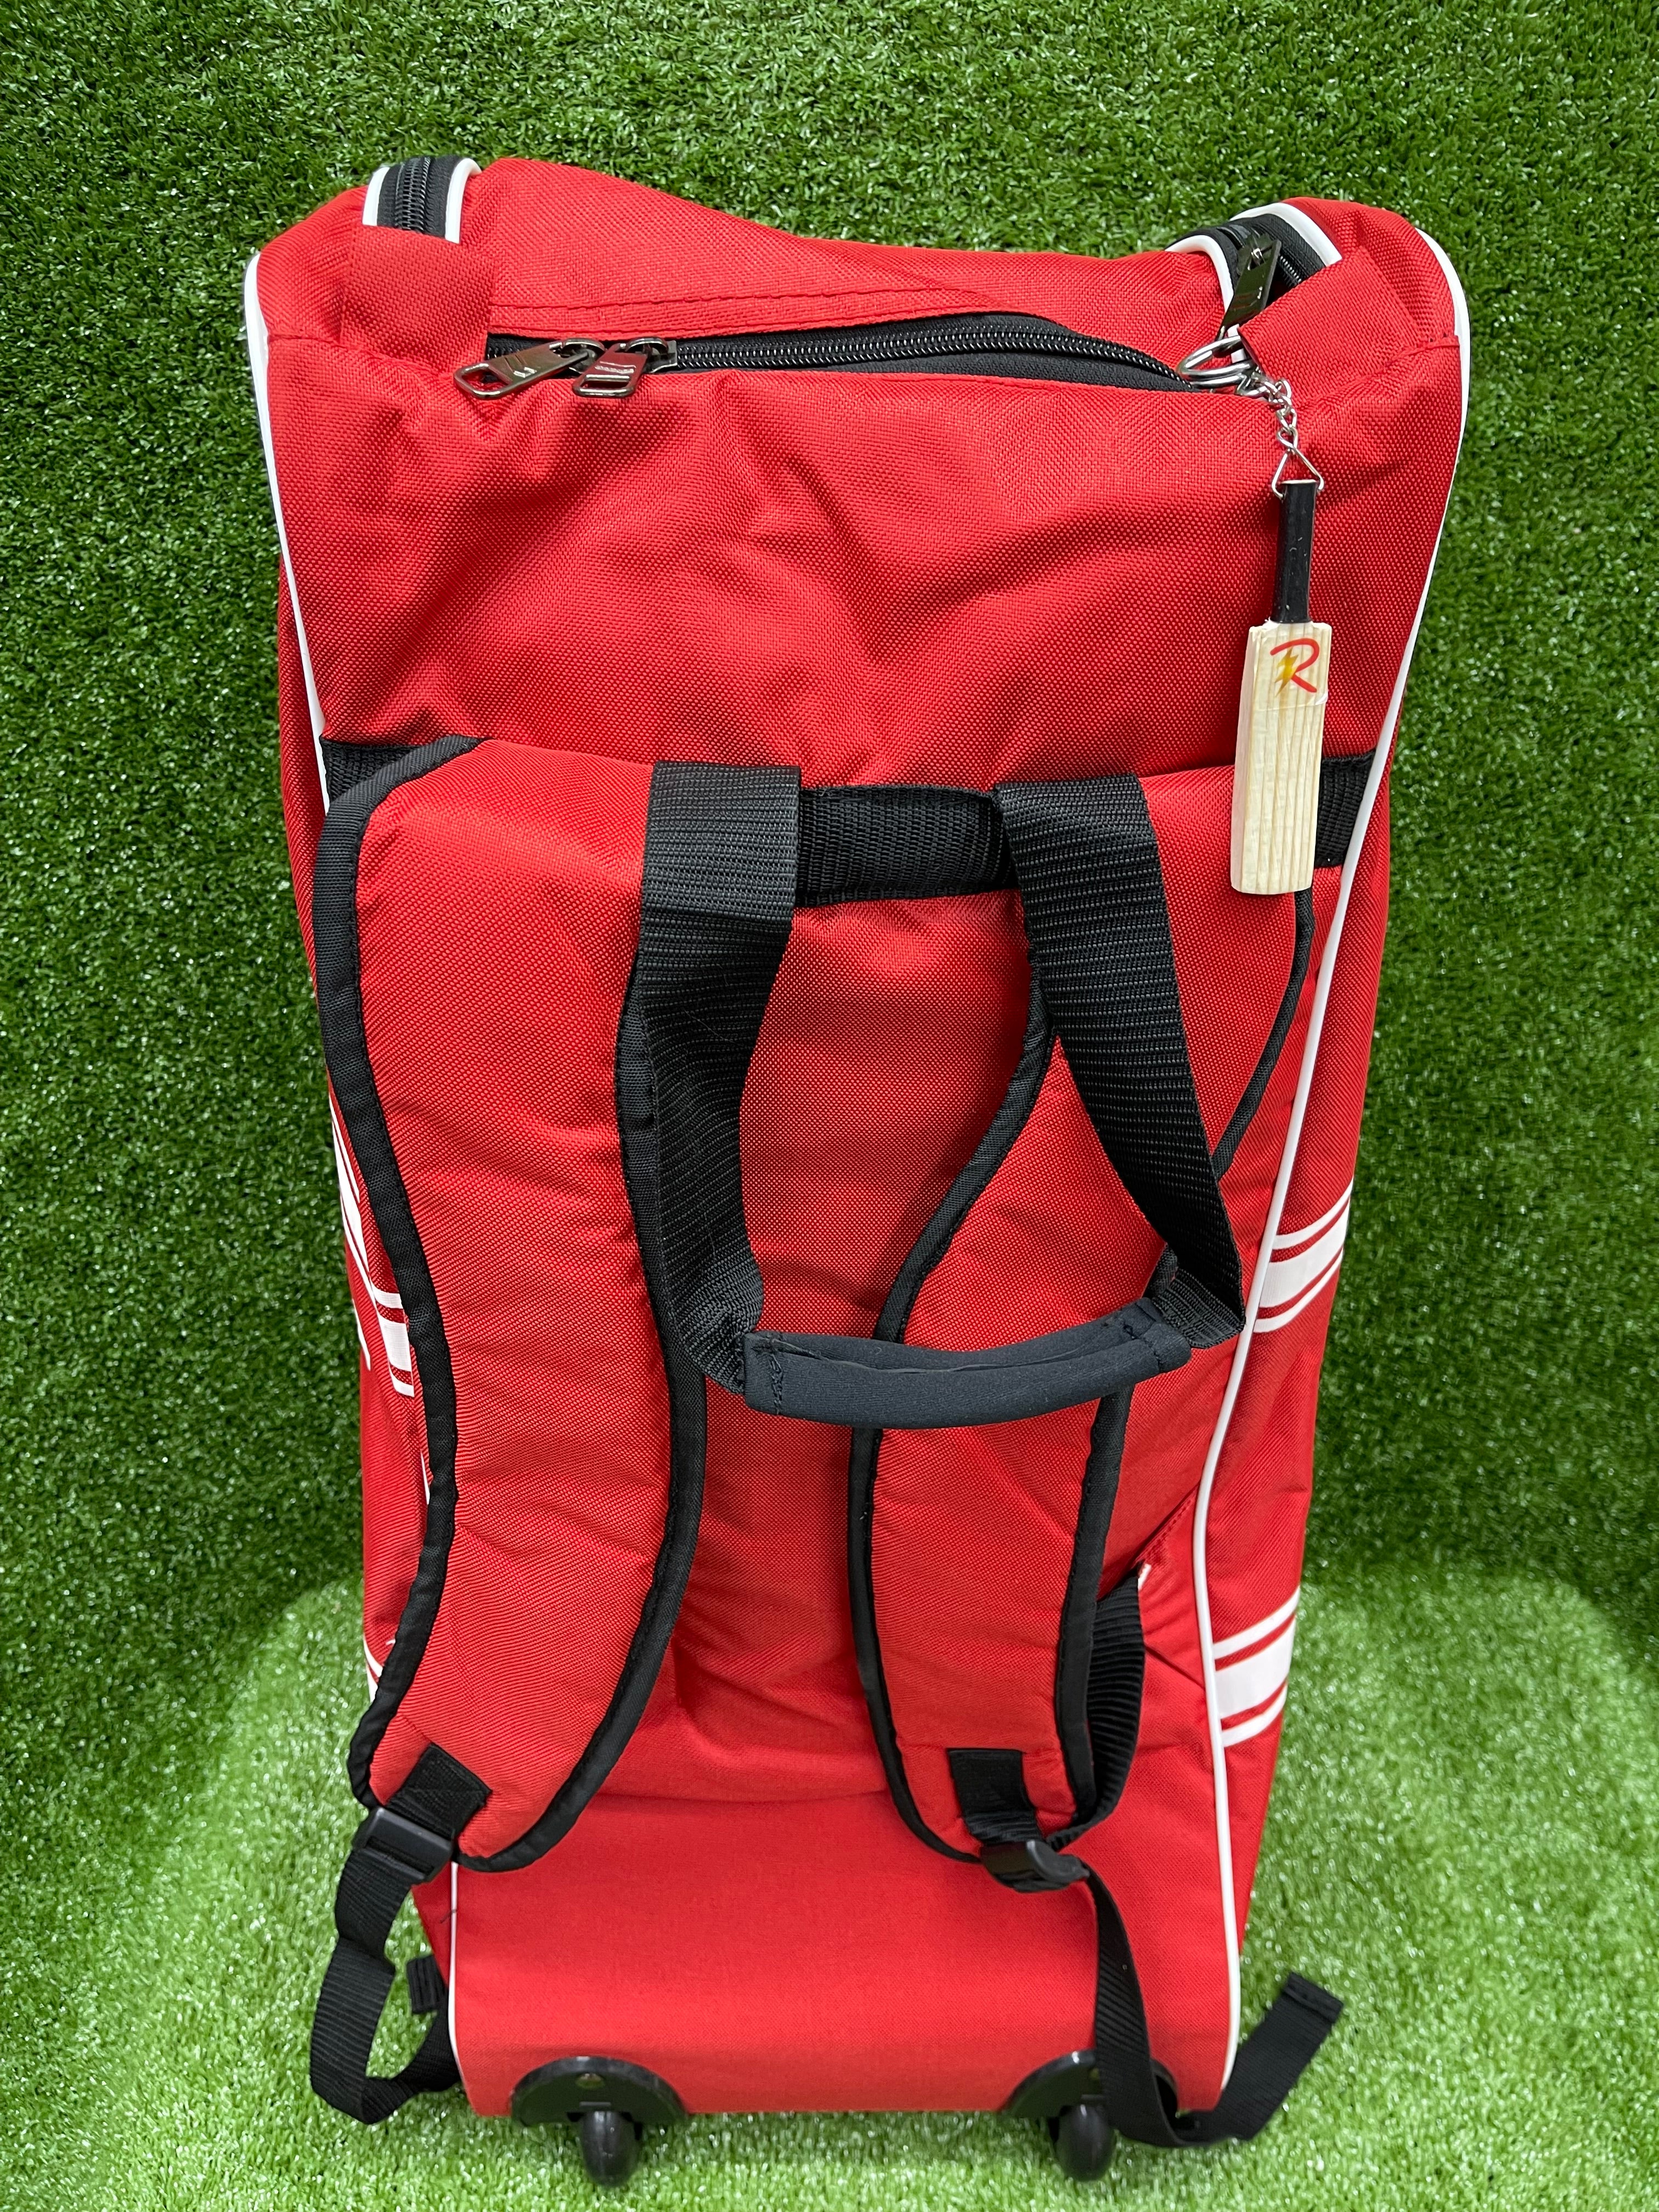 MRF Master Wheelie Junior Cricket Kit Bag